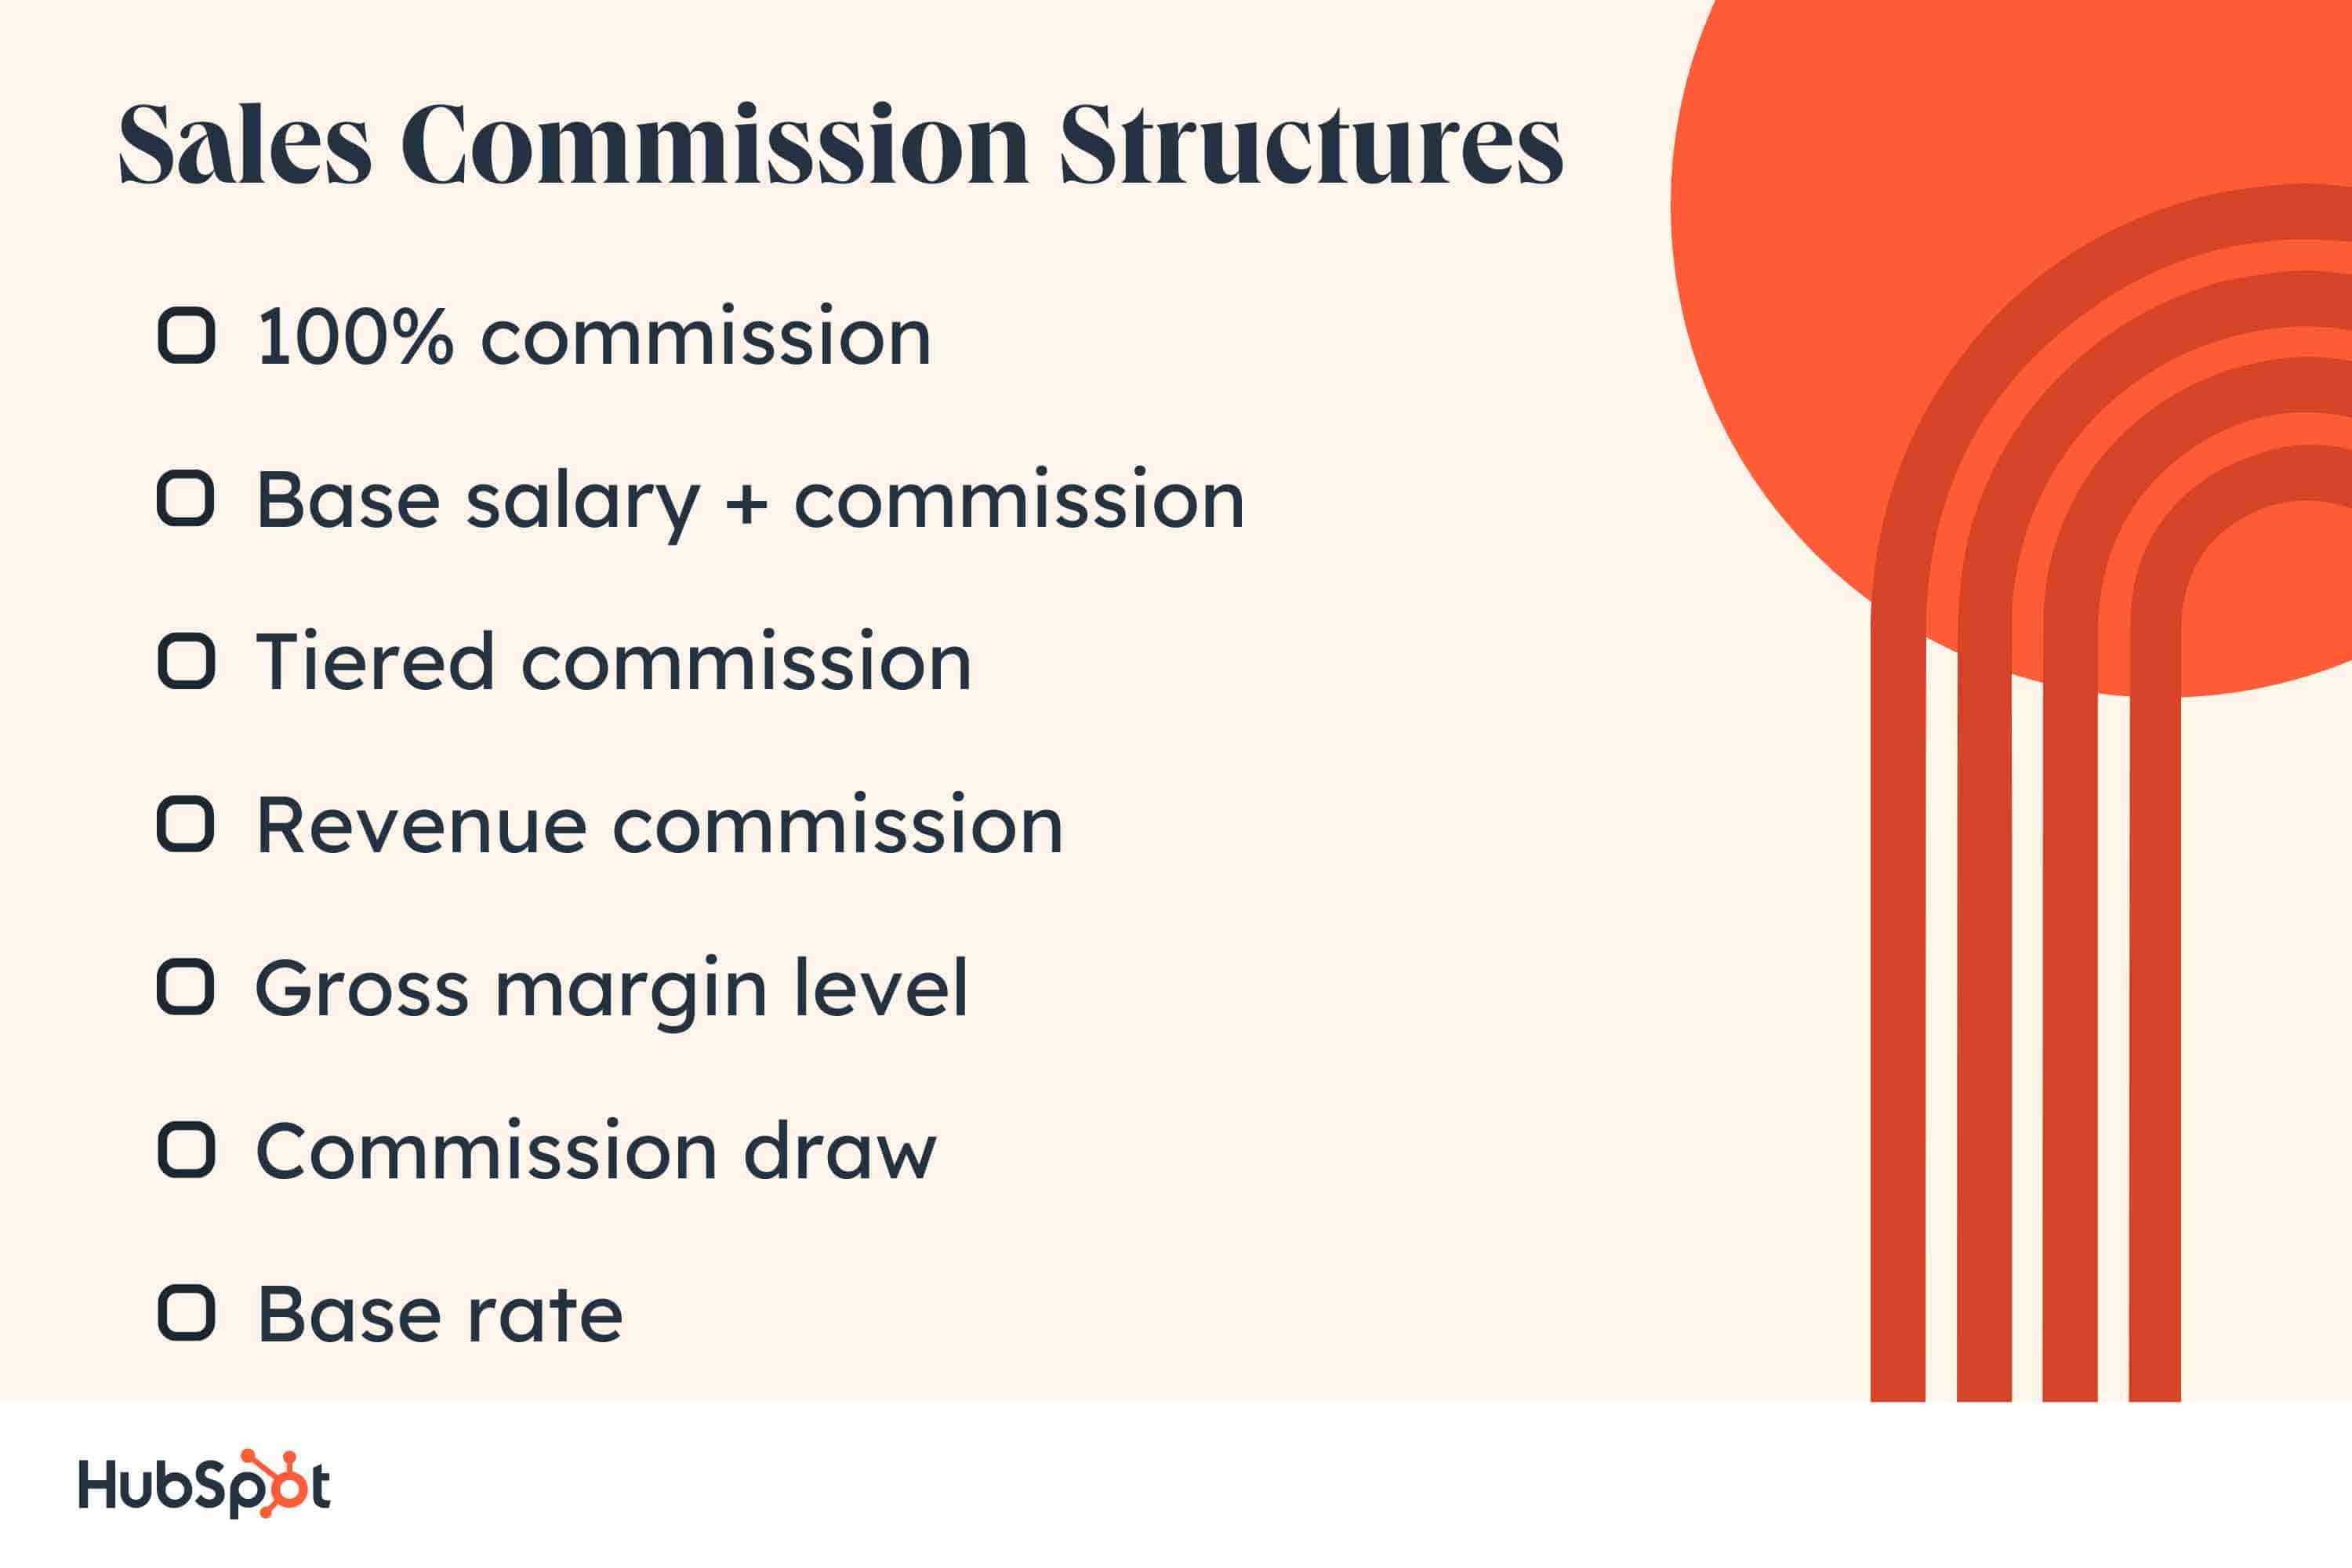 sales management, commission structures. 100% commission. Base salary + commission. Tiered commission. Revenue commission. Gross margin level. Commission draw. Base rate.